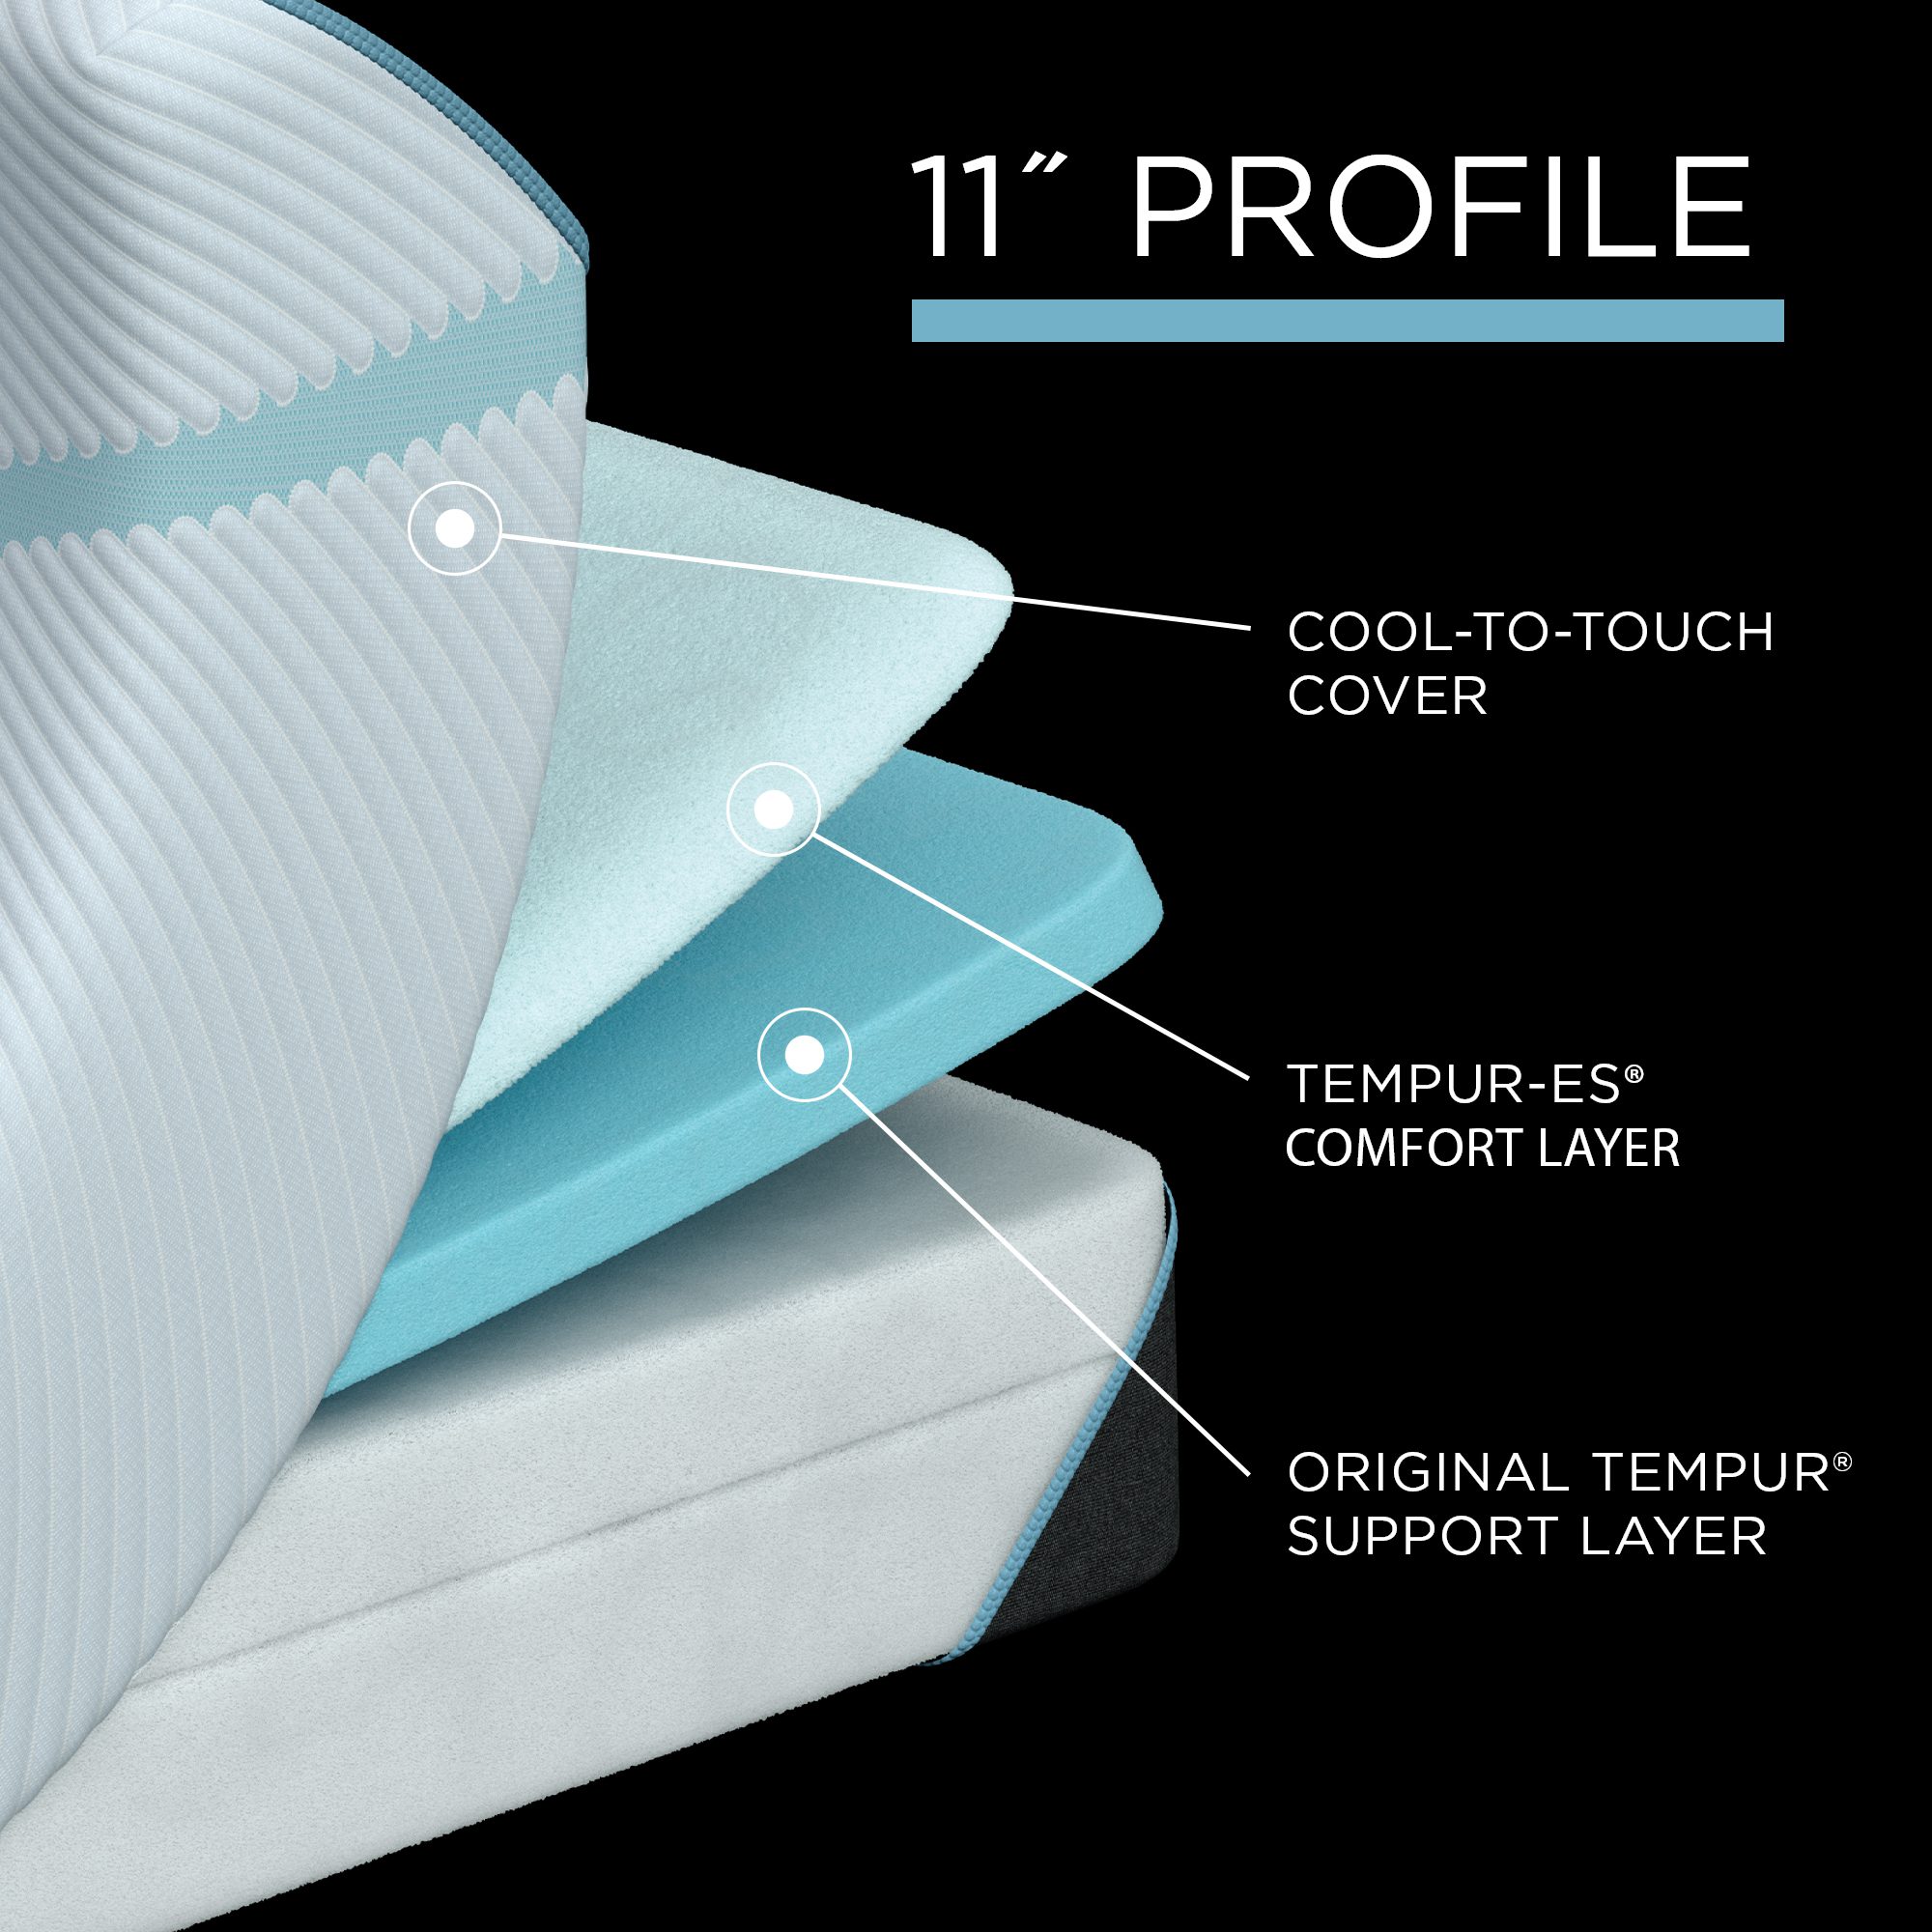 TEMPUR-Adapt Medium – Bed Pros Mattress